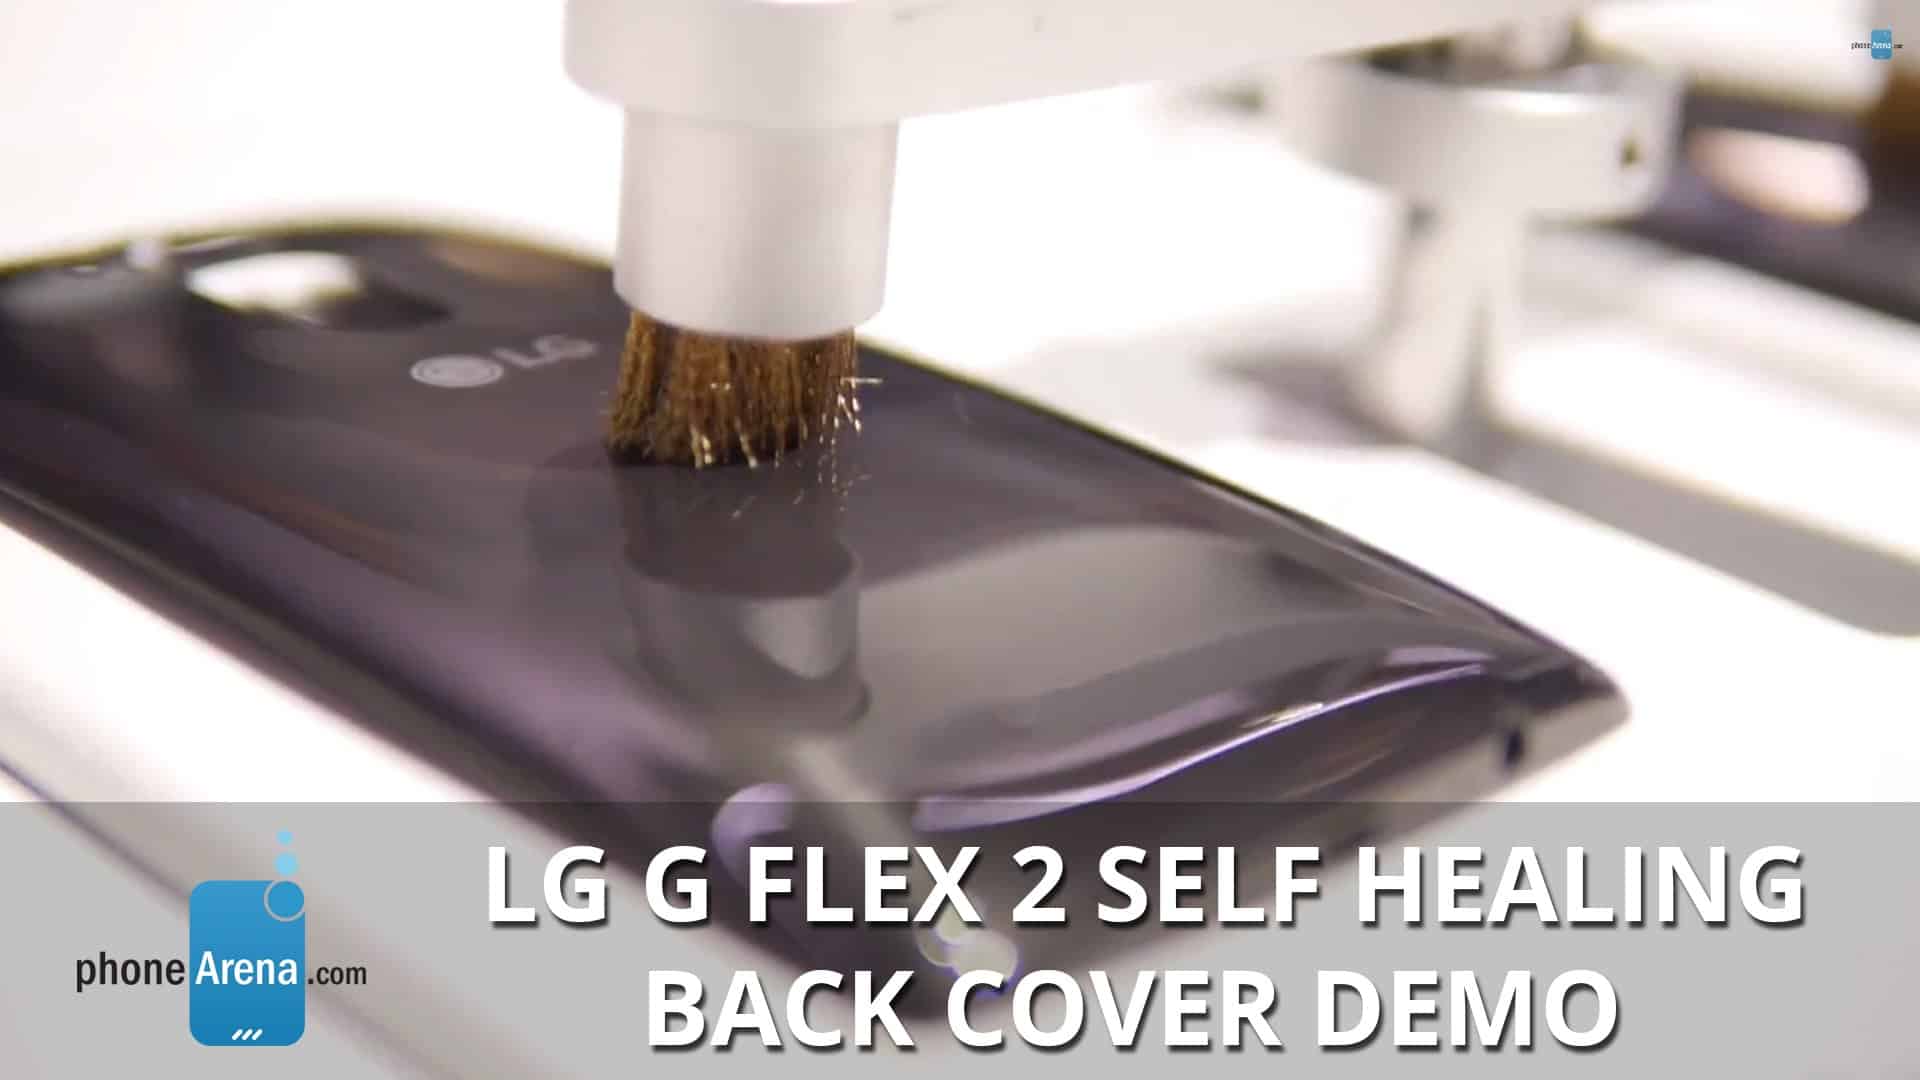 Vídeo mostra LG G Flex 2 se auto-regenerando  1